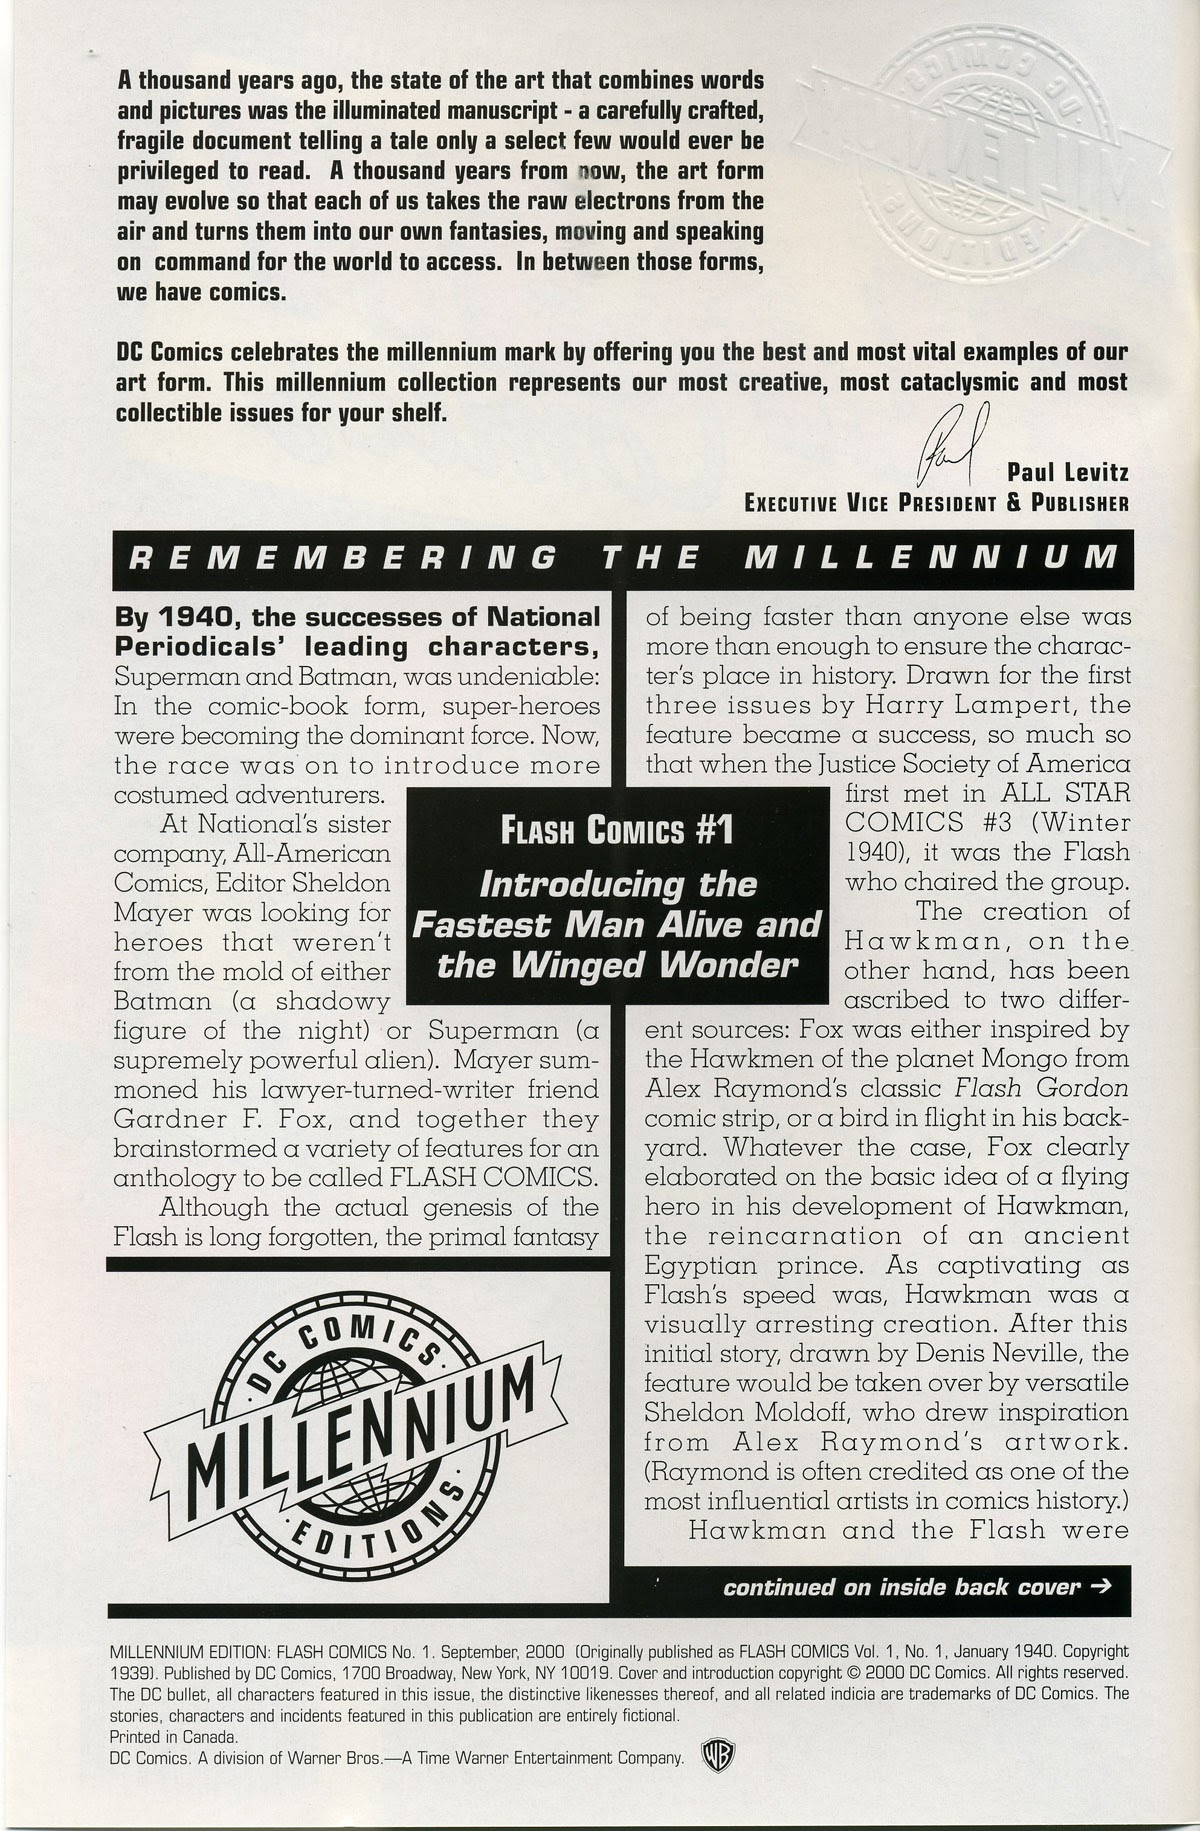 Read online Millennium Edition: Flash Comics 1 comic -  Issue # Full - 2